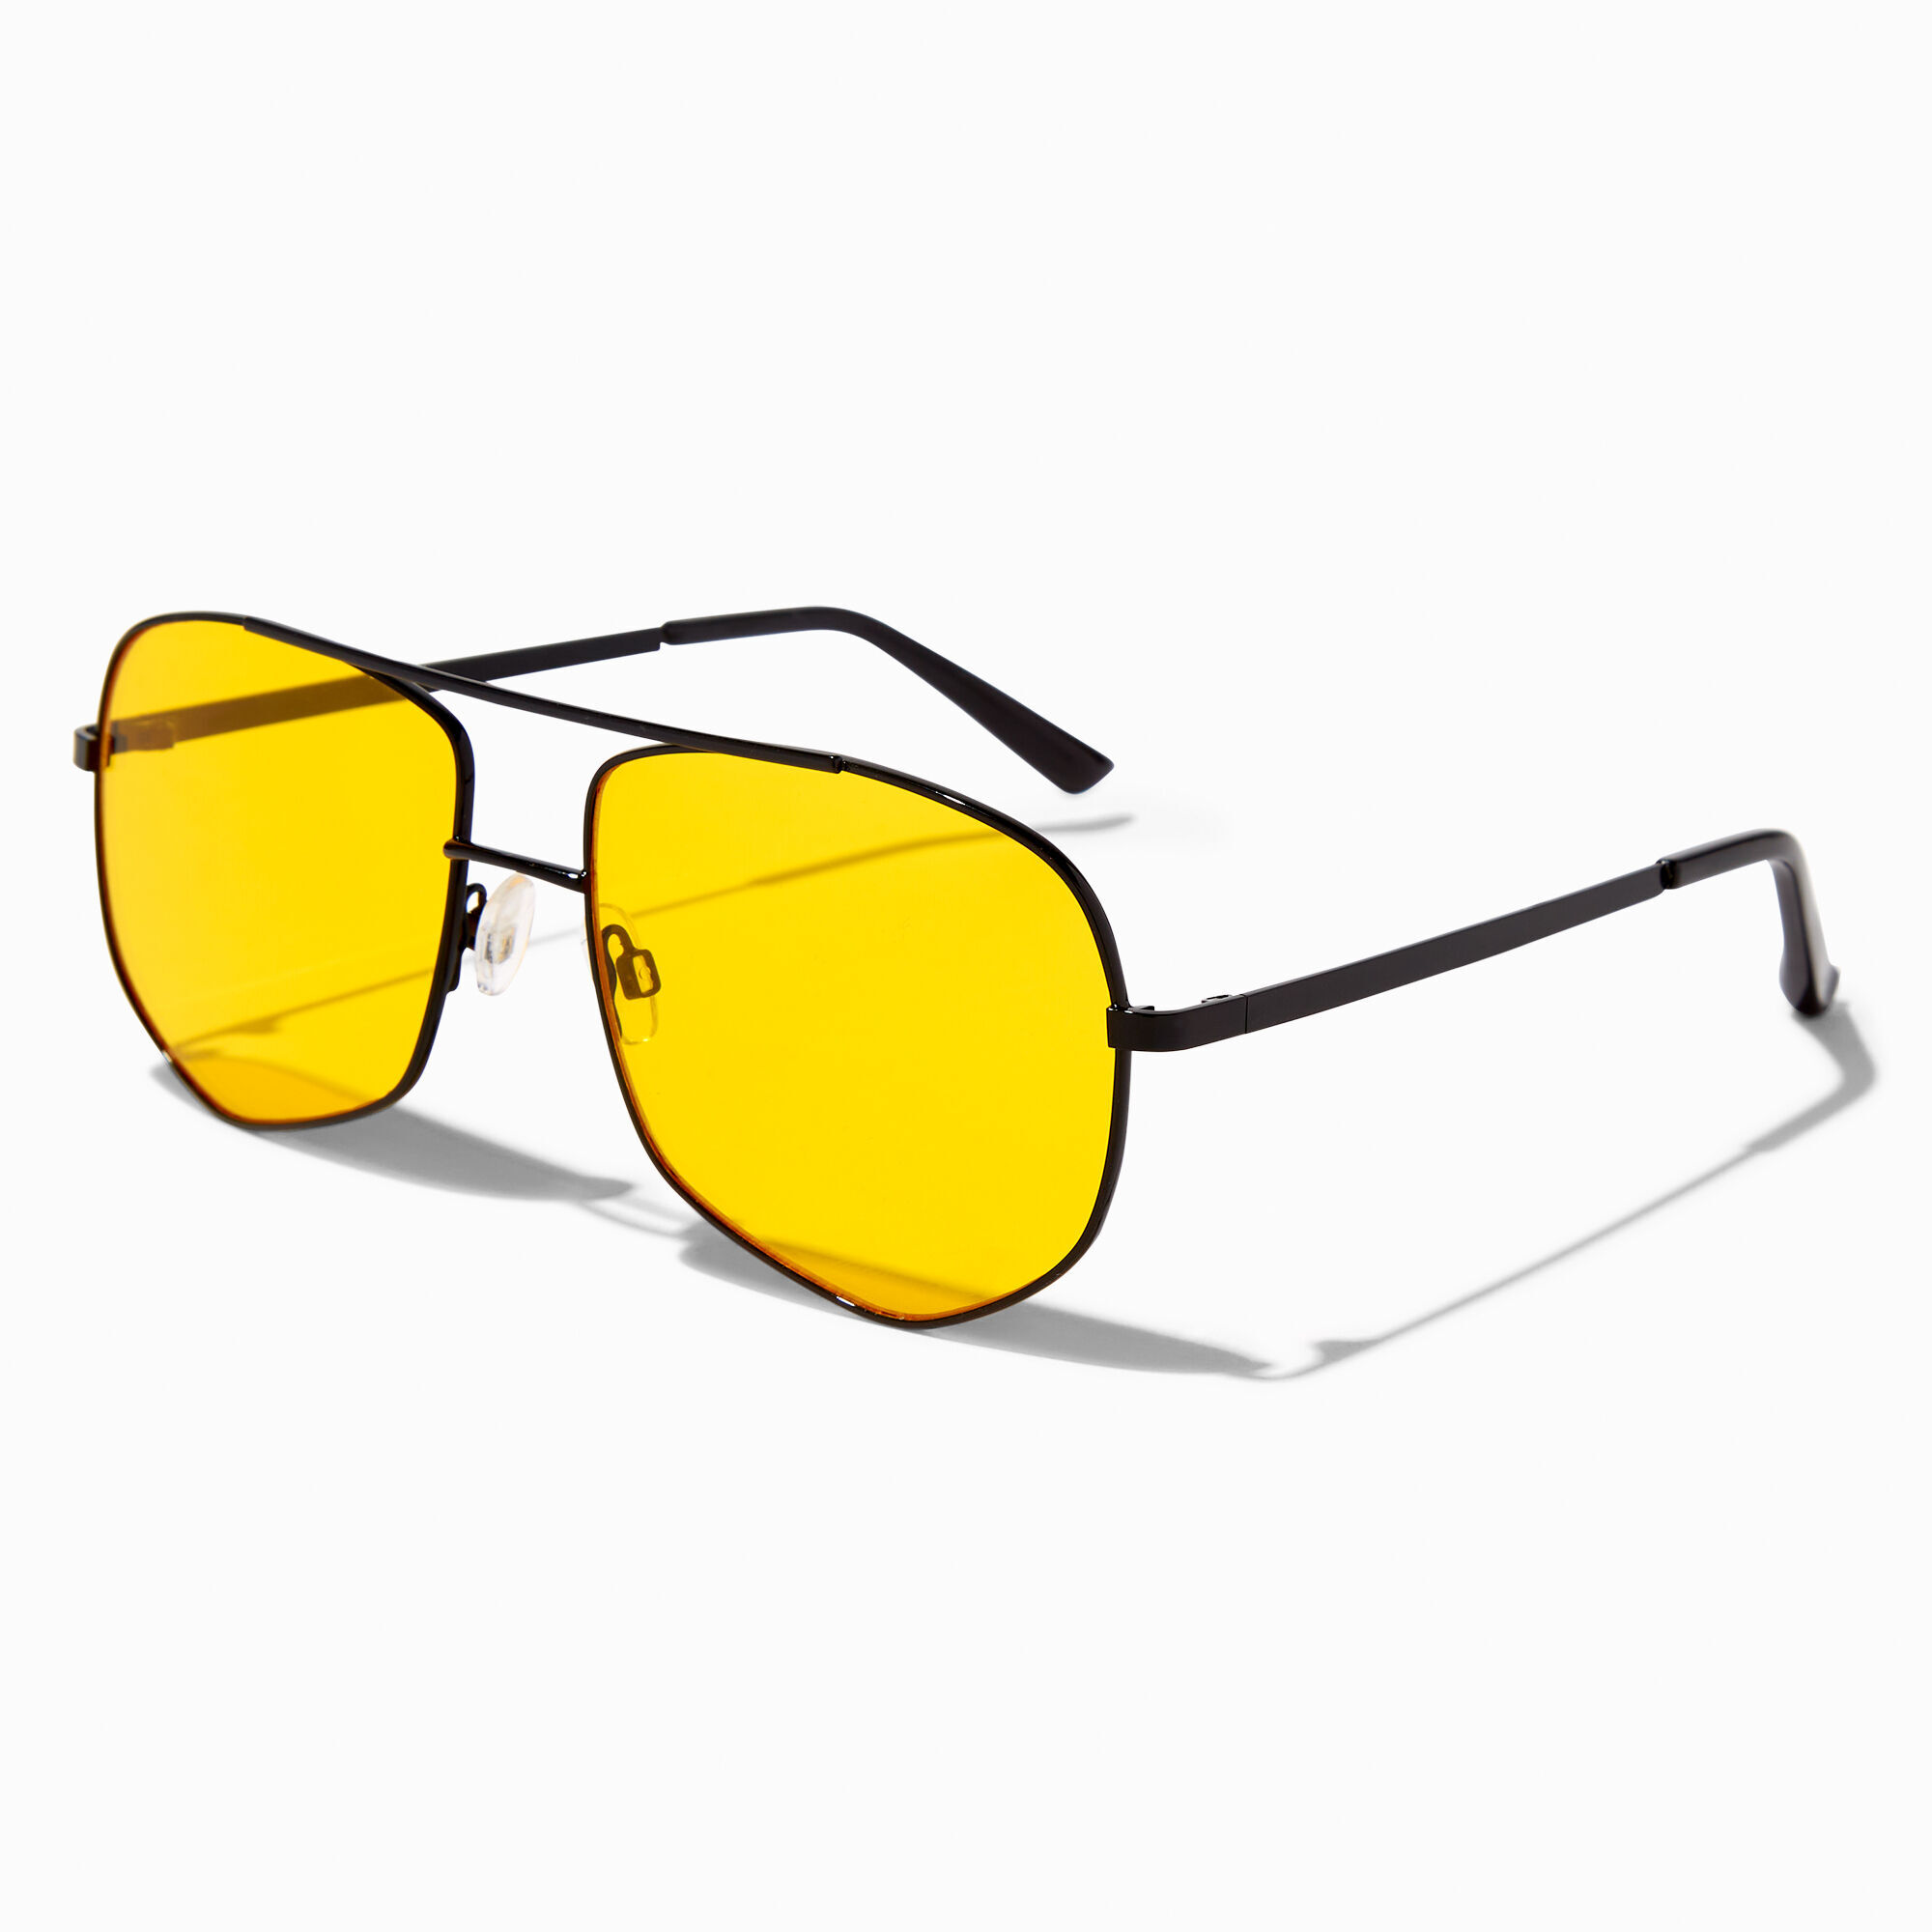 Buy Gold Sunglasses for Men by John Jacobs Online | Ajio.com